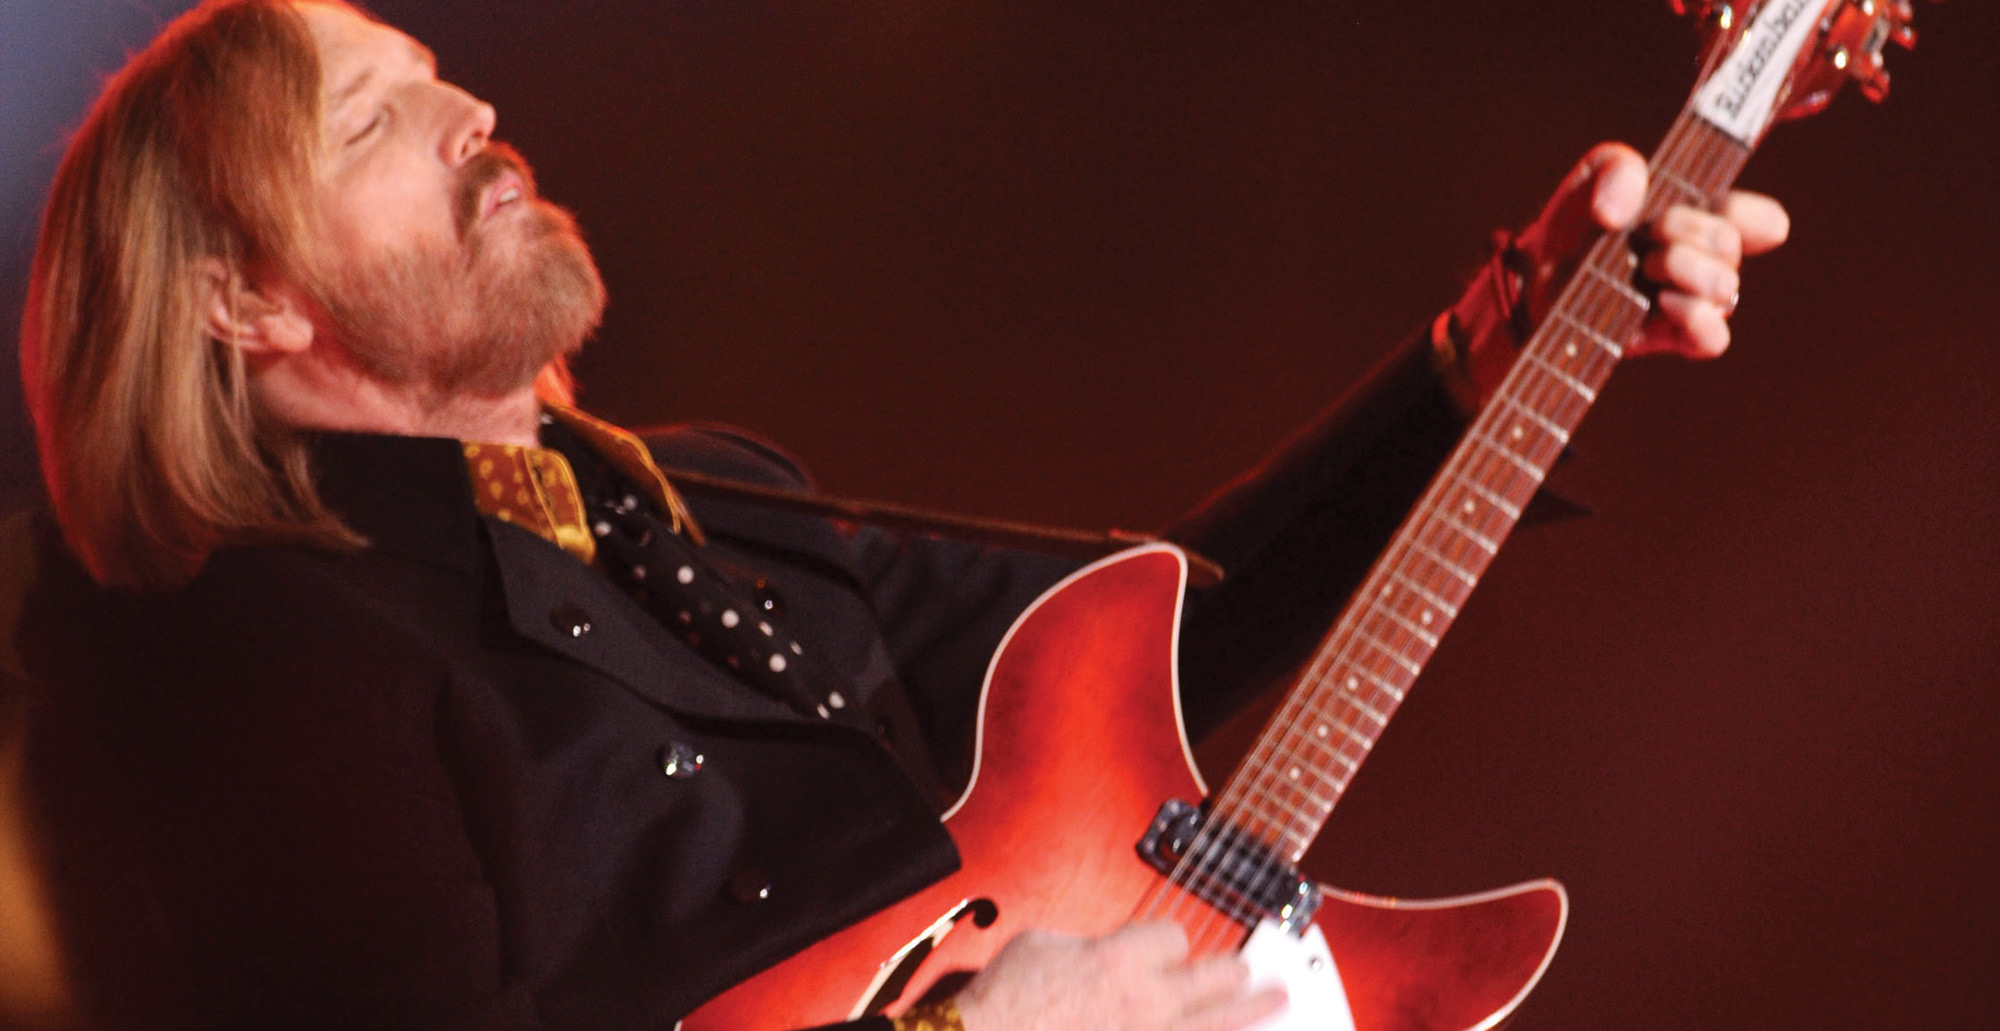 Tom Petty American Girl. Strumming Session – Guitar Coach Magazine